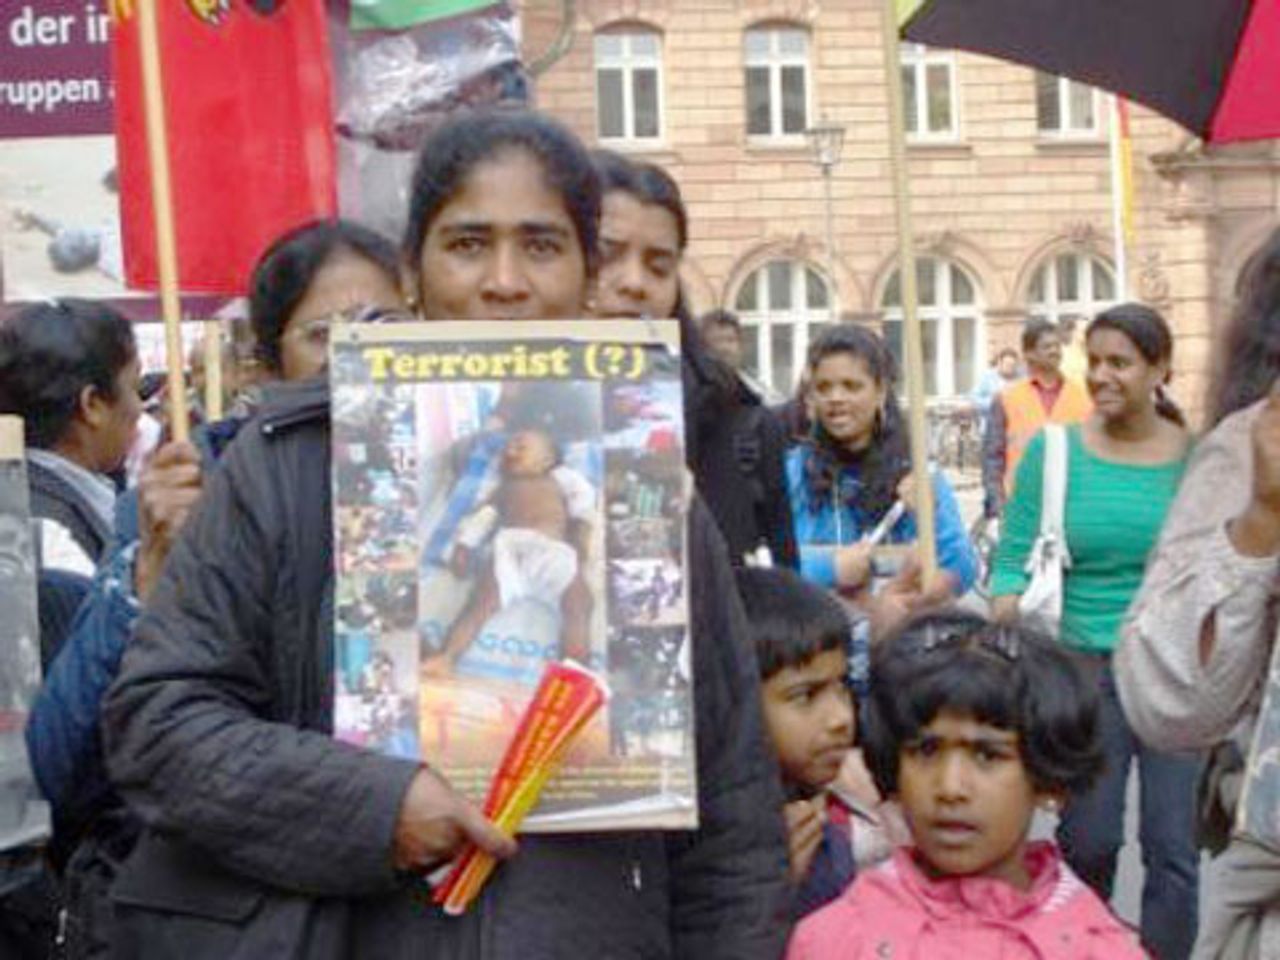 Tamils participating in the Frankfurt demonstration